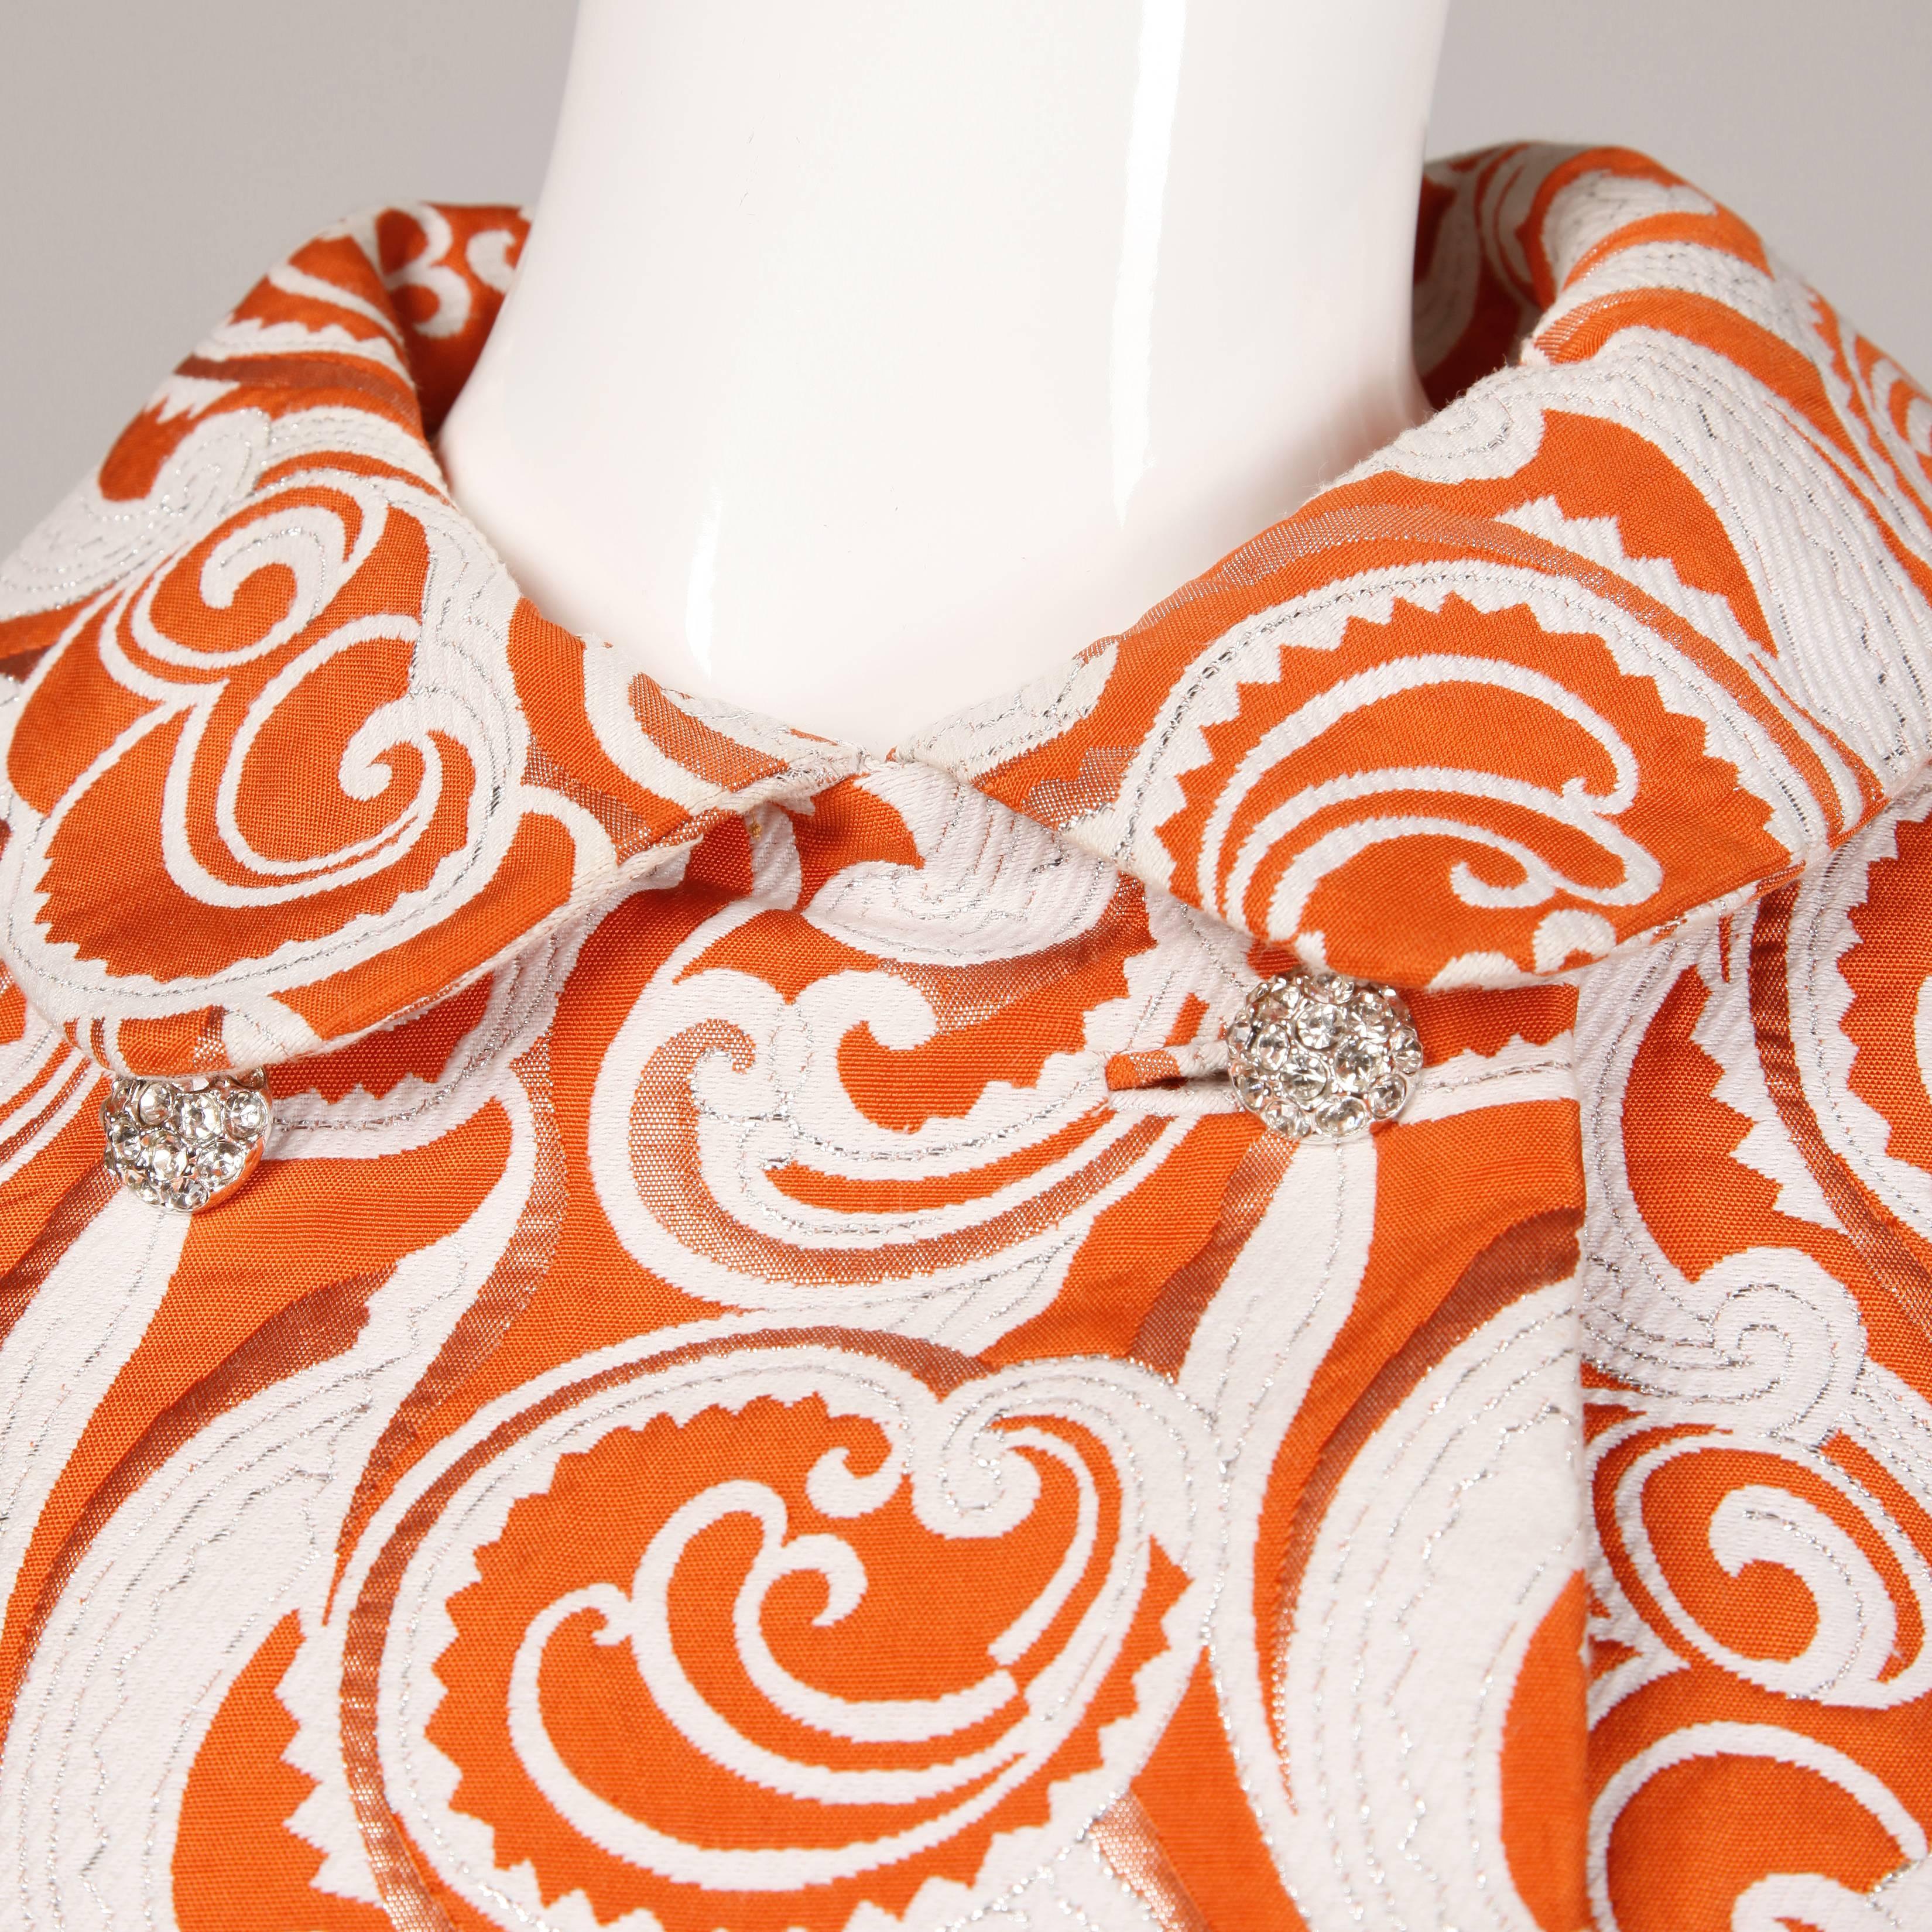 Teal Traina 1960 Vintage Orange Brocade Jacket, Belt + Dress 3-Piece Ensemble 2